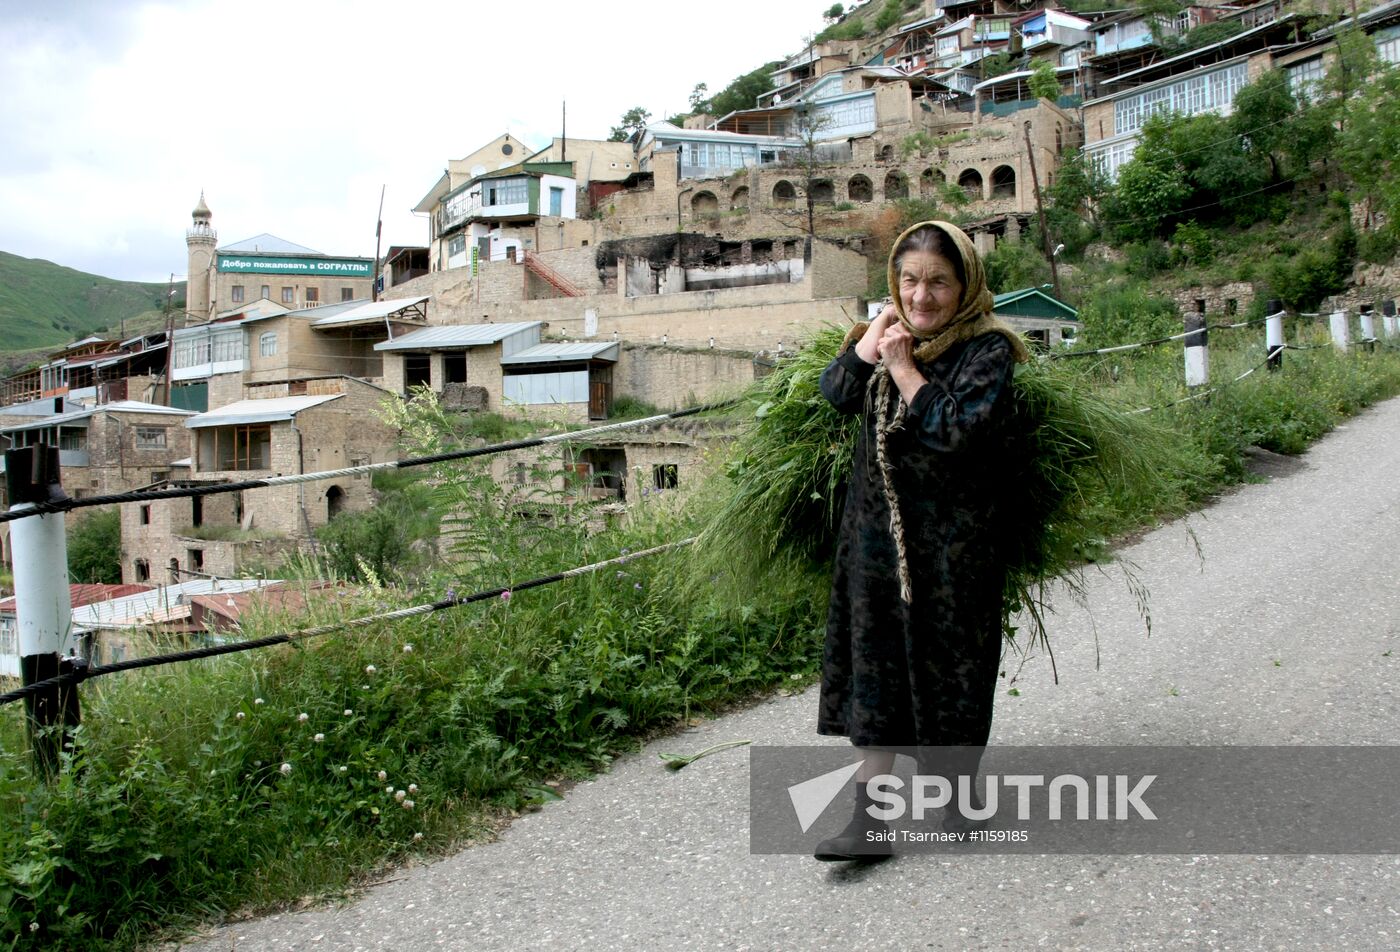 Life of villagers in Gunib District, Dagestan